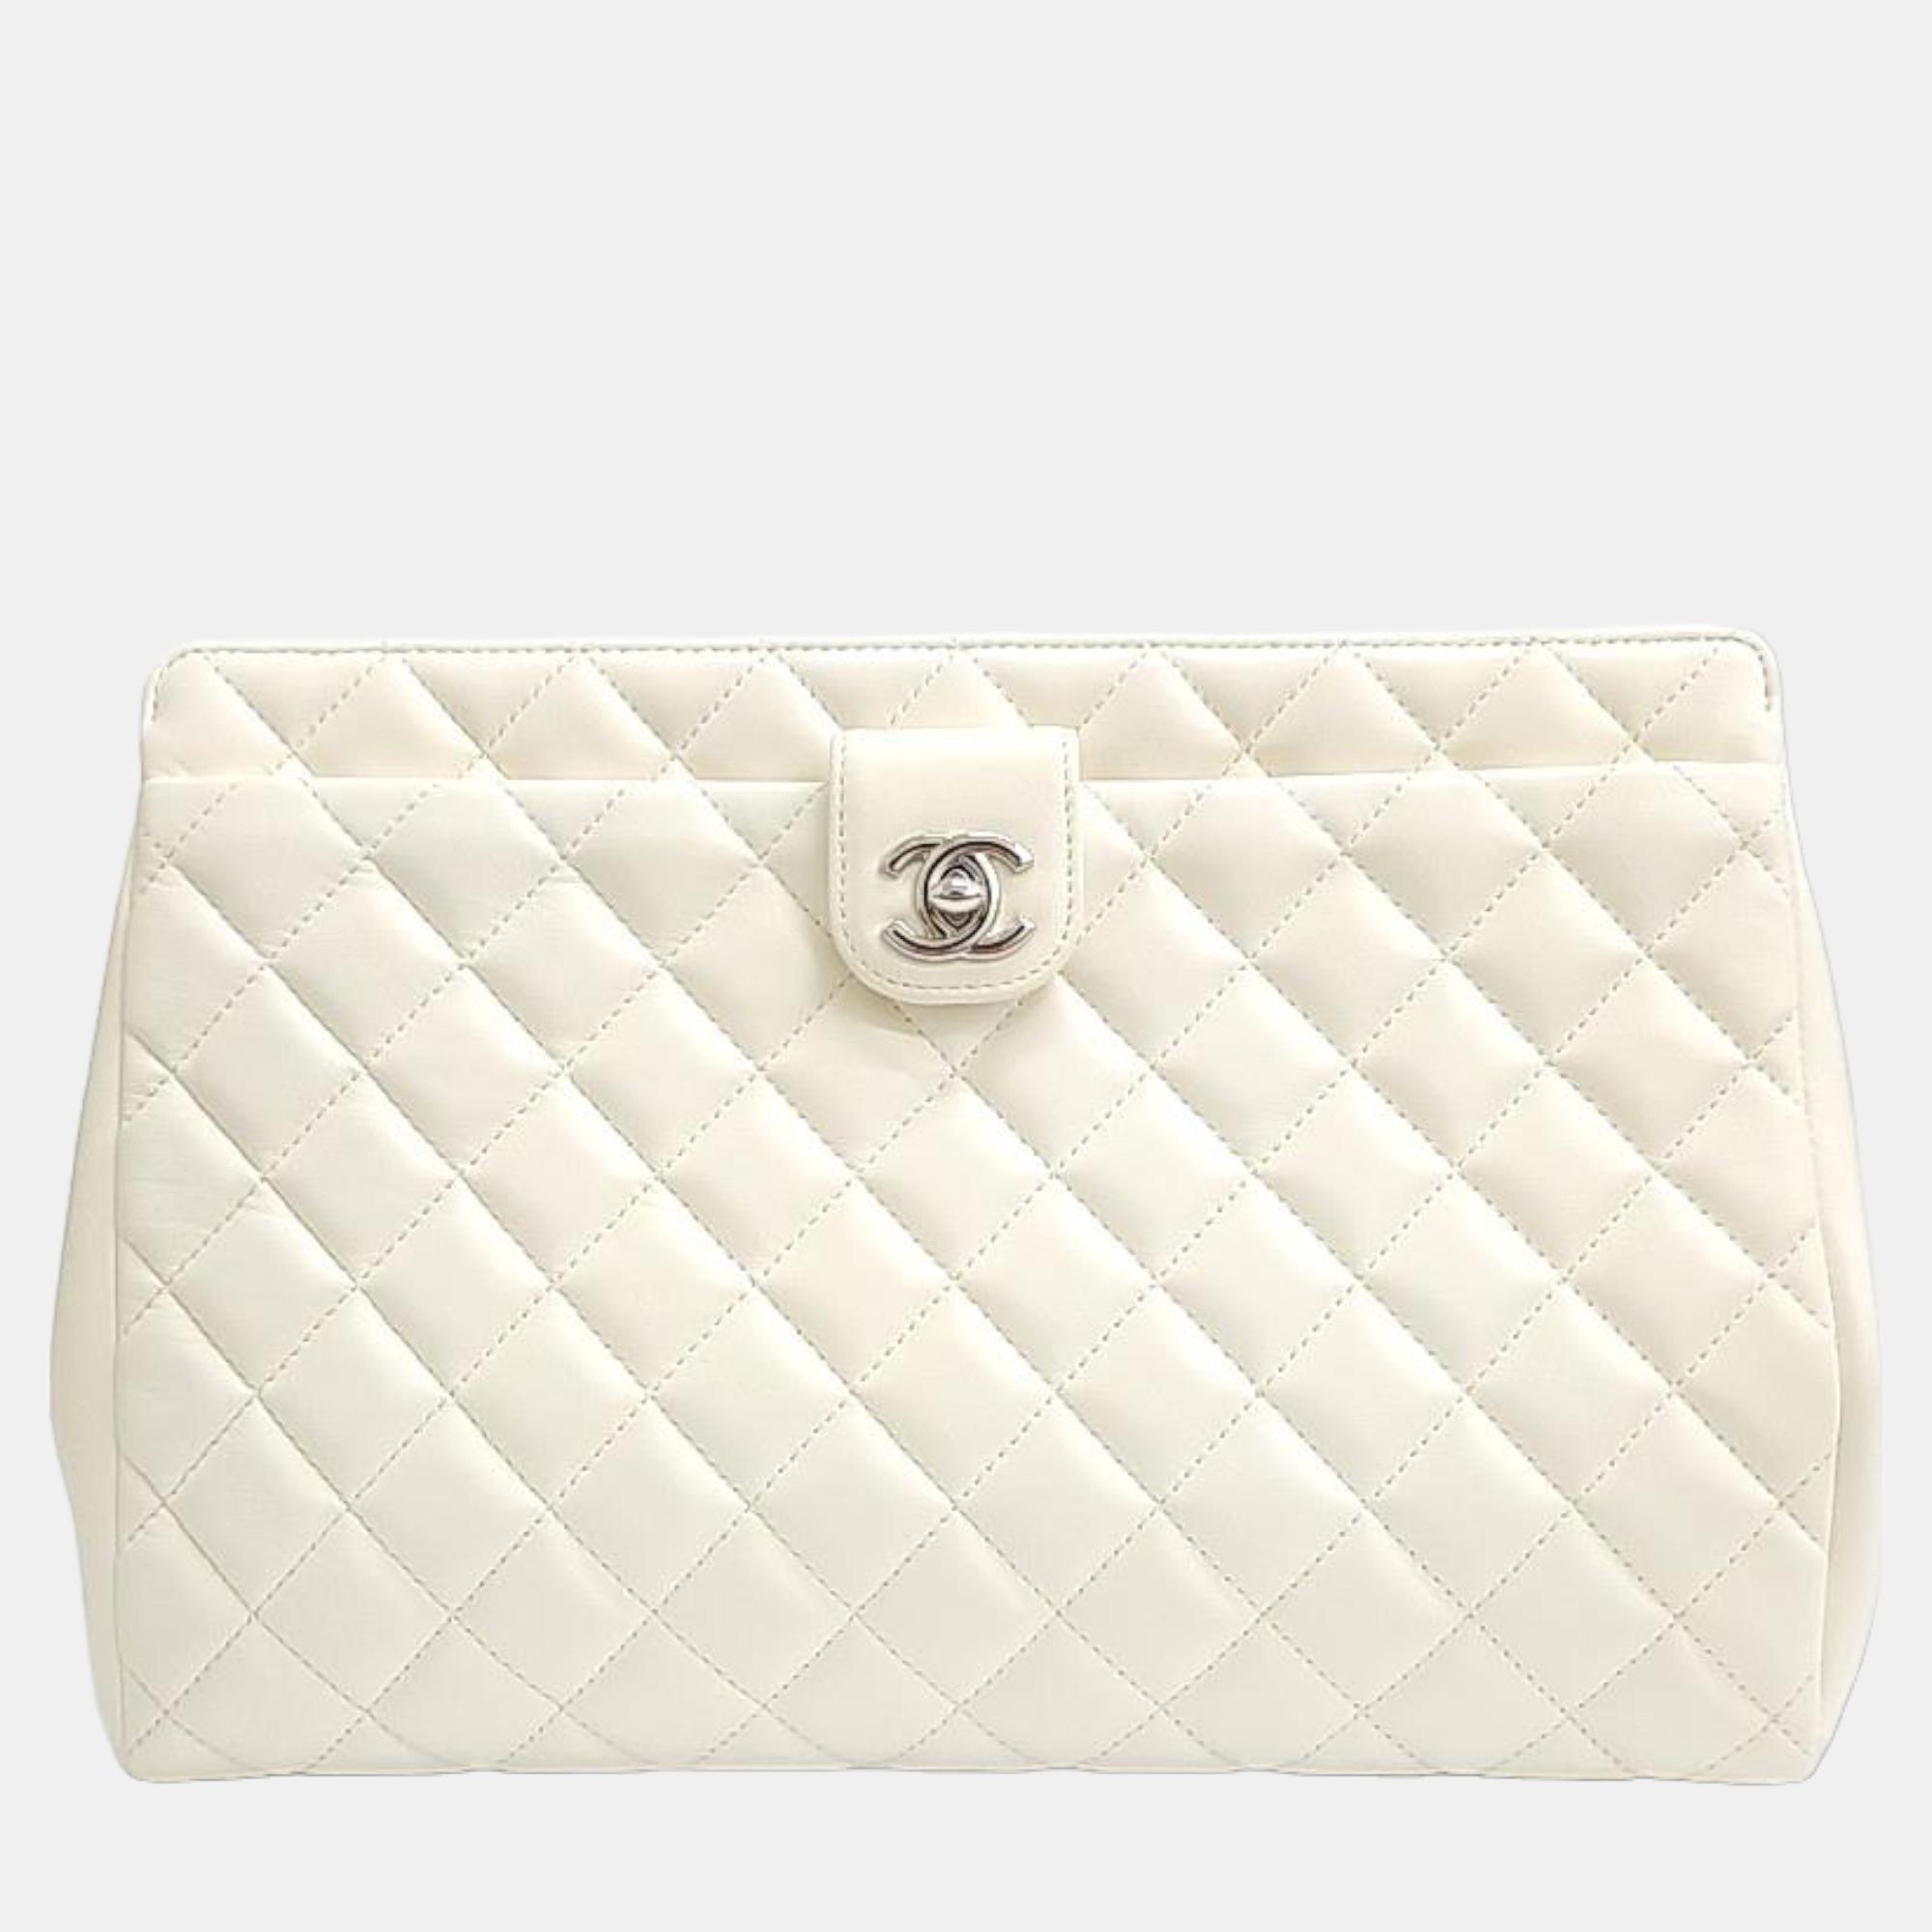 

Chanel White Leather CC Clutch Bag